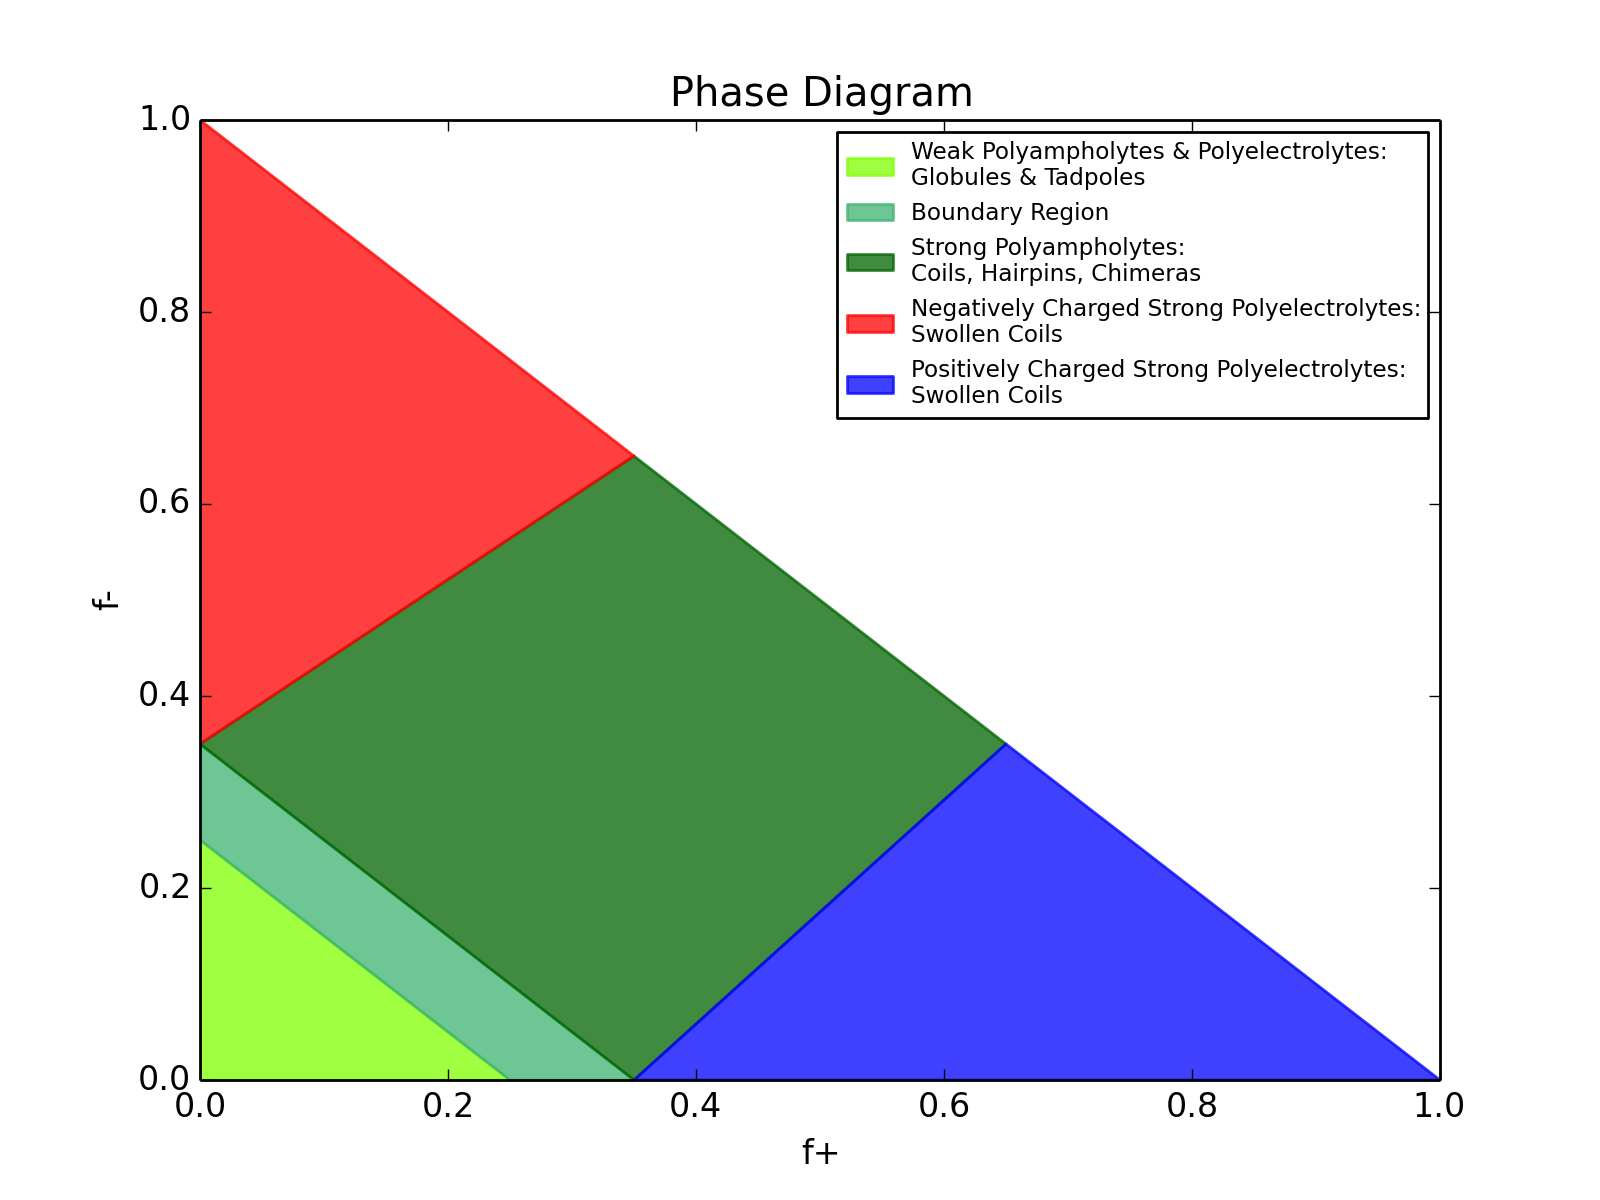 http://pappulab.wustl.edu/img/phase_diagram.png